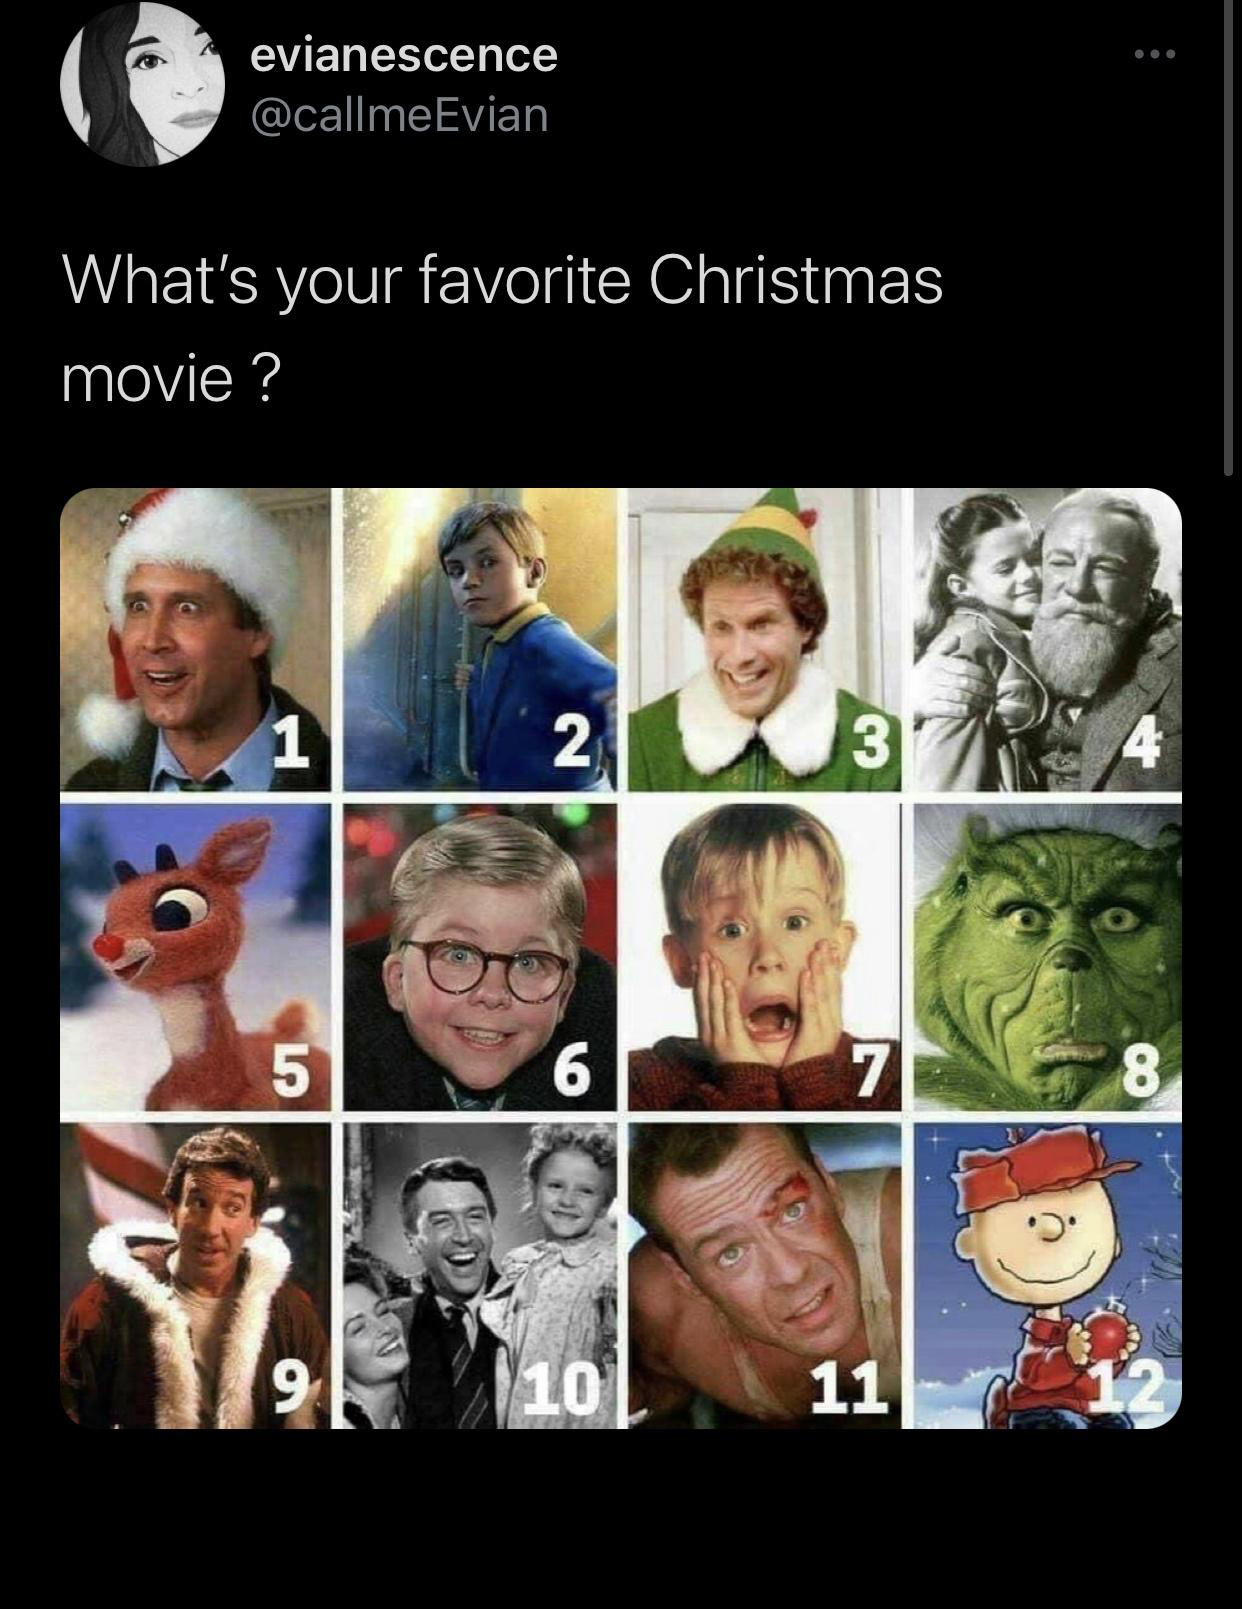 pick a favorite christmas movie - evianescence What's your favorite Christmas movie? 1 N 3 4 5 6 7 8 0 10 11